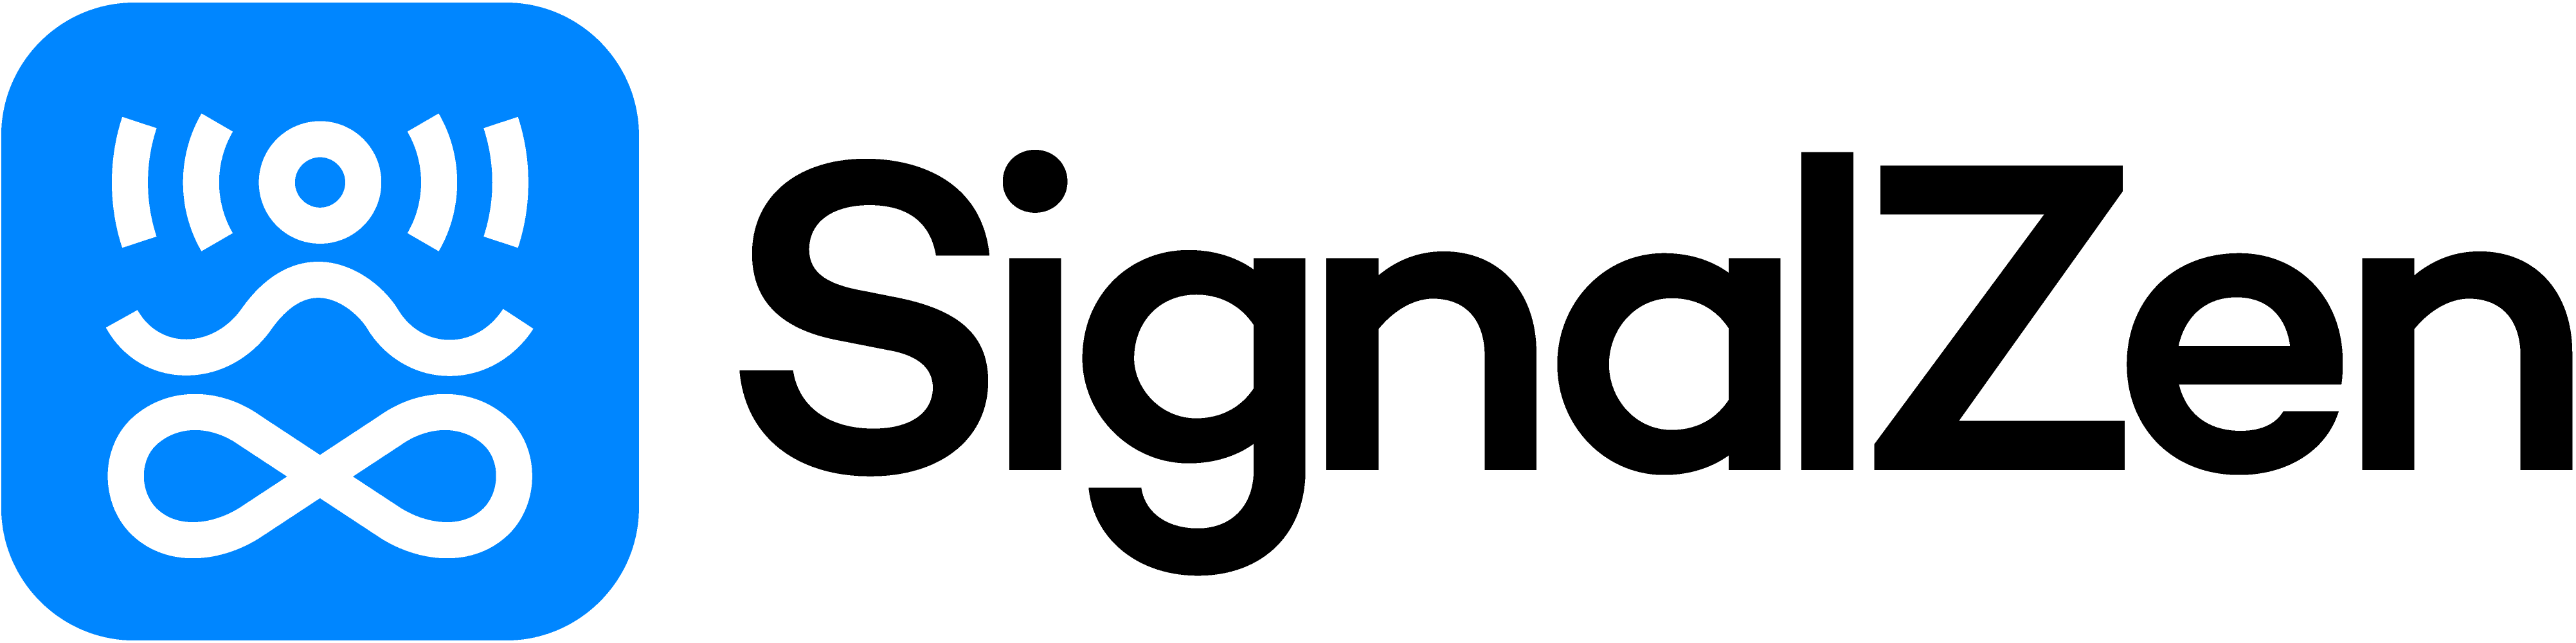 Signalzen logo png